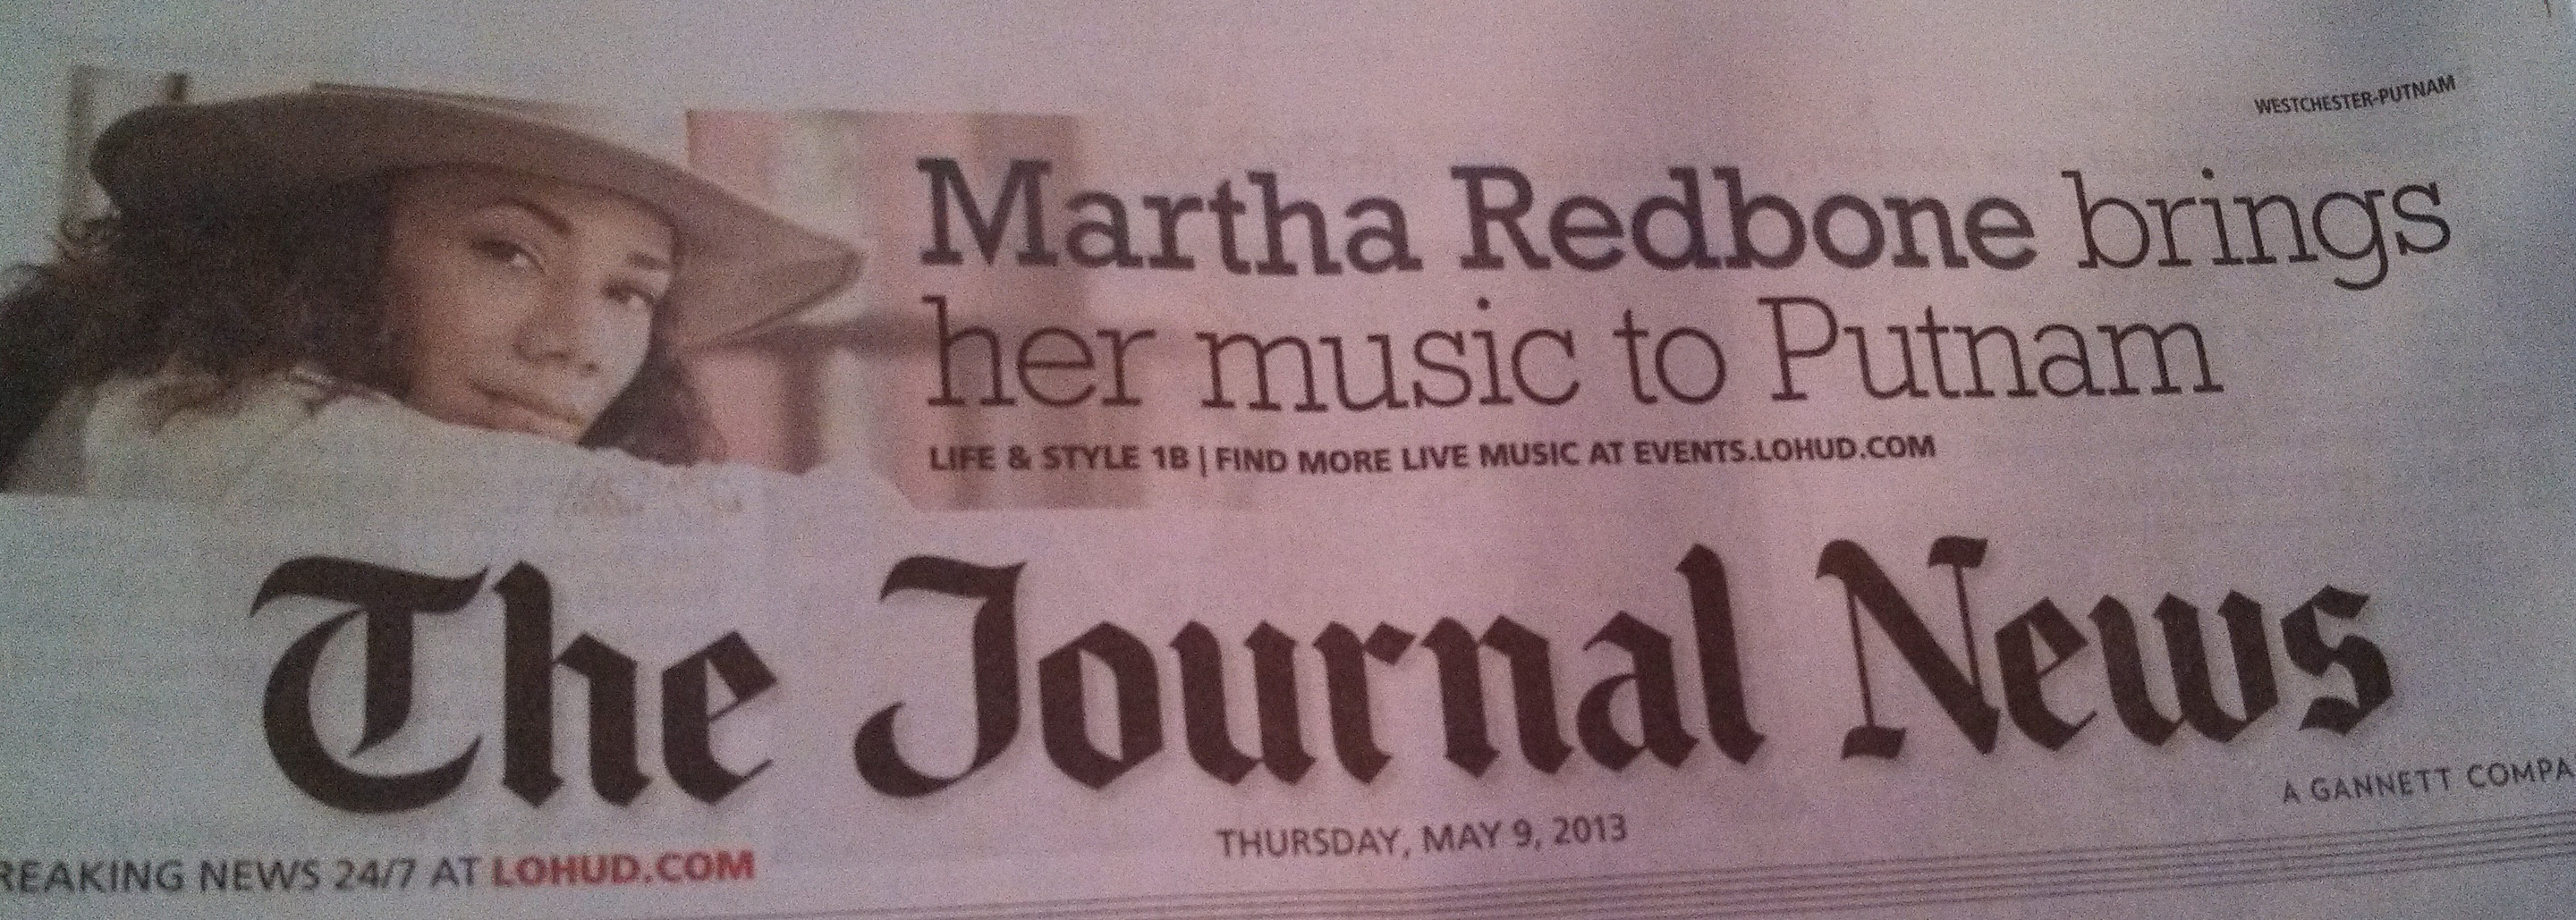 Journal News Martha cropped